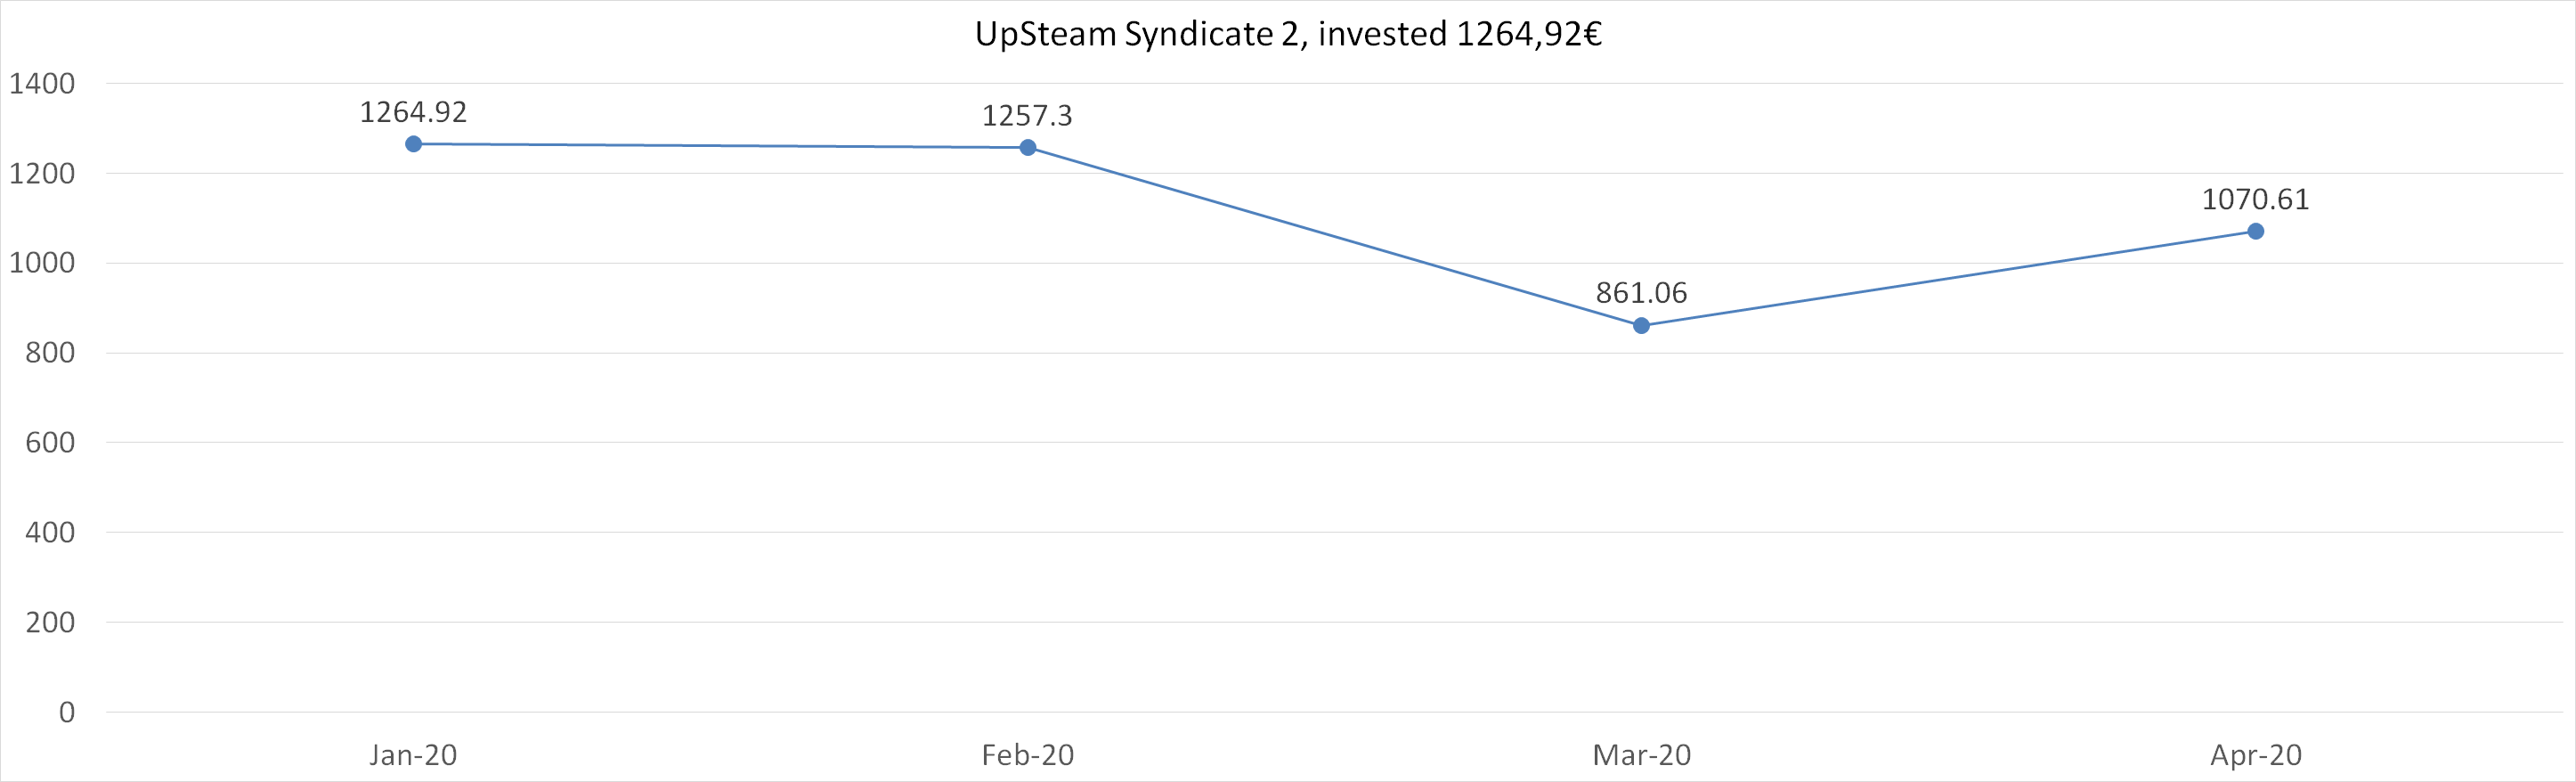 UpSteam syndicate 2 net worth april 2020